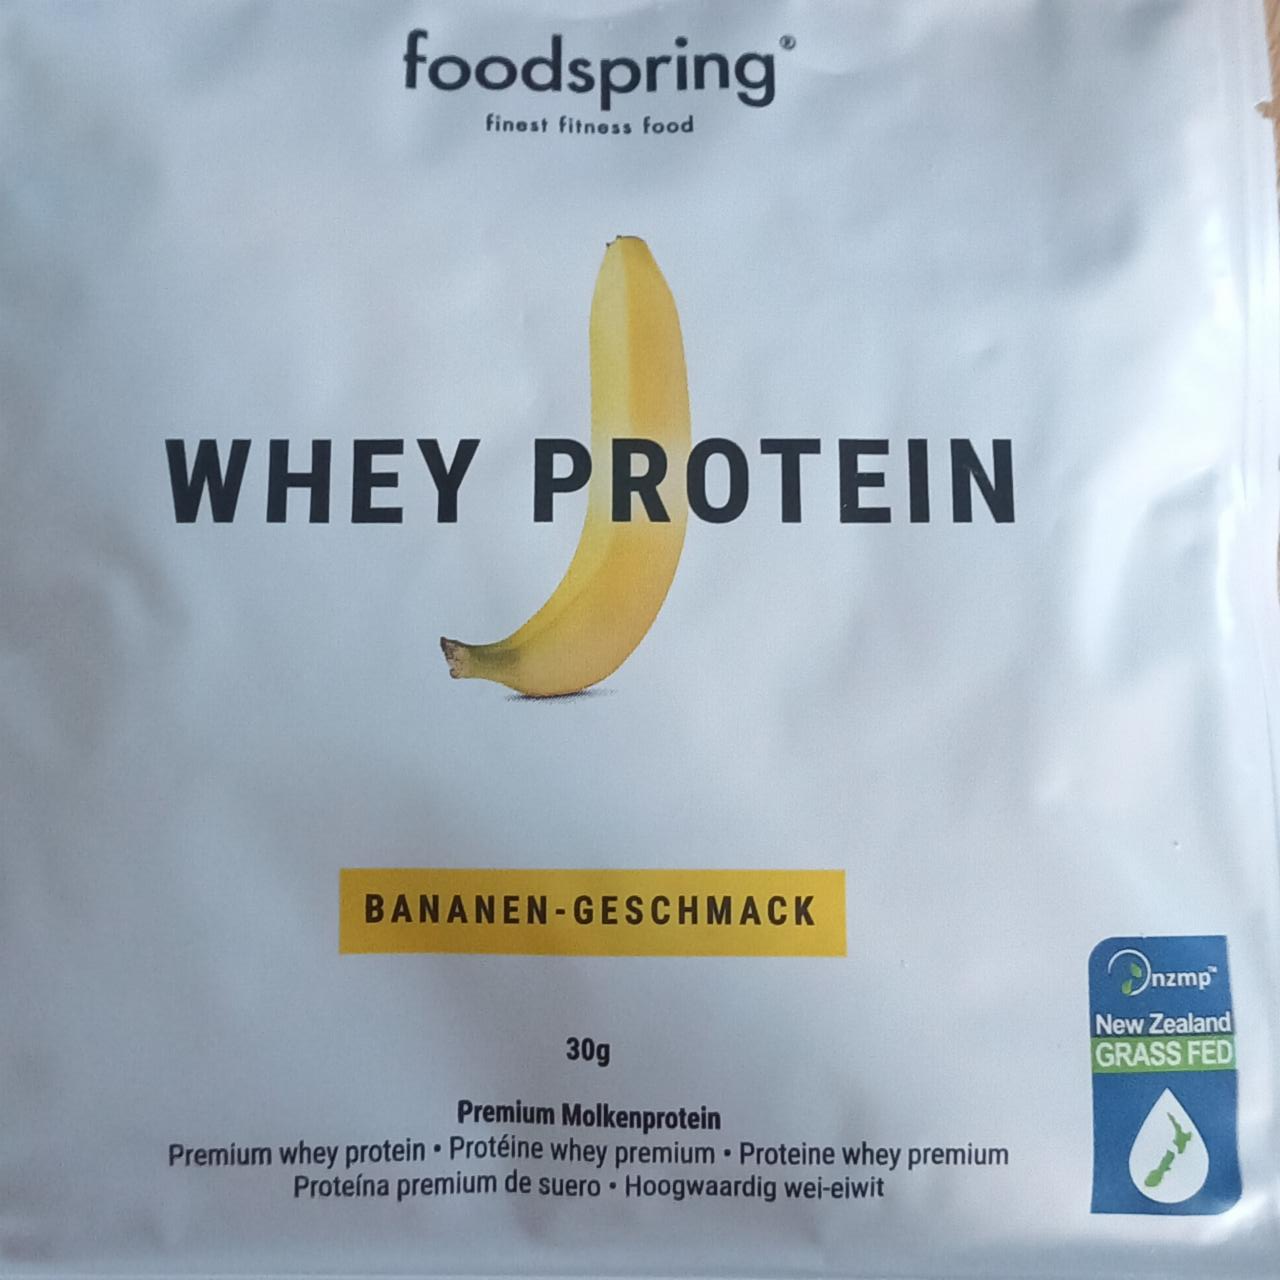 Fotografie - Whey protein bananen-geschmack Foodspring